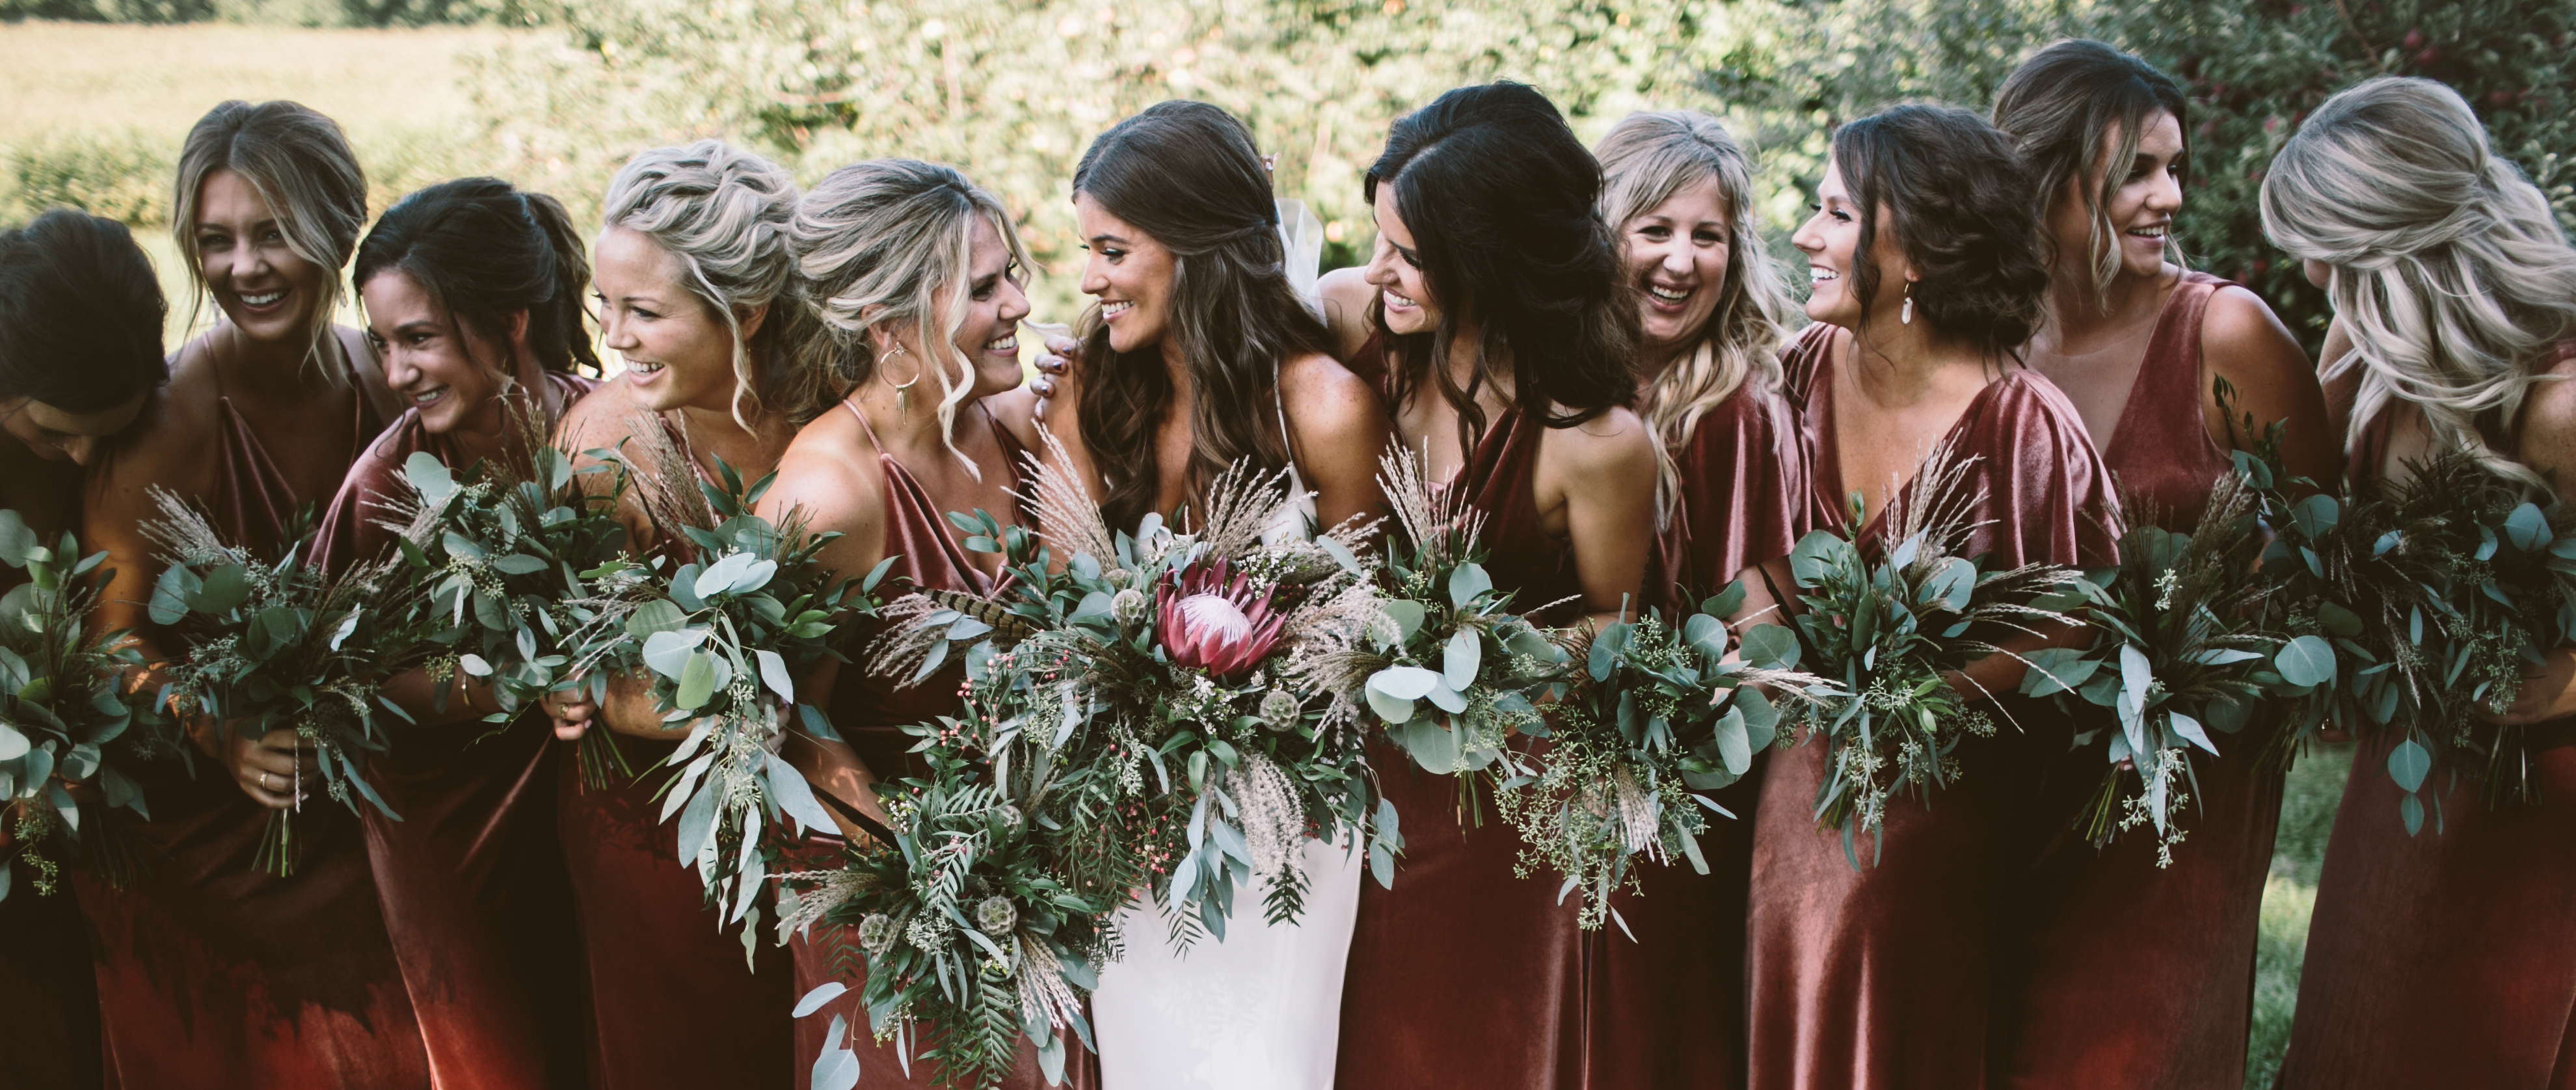 rose bridesmaids